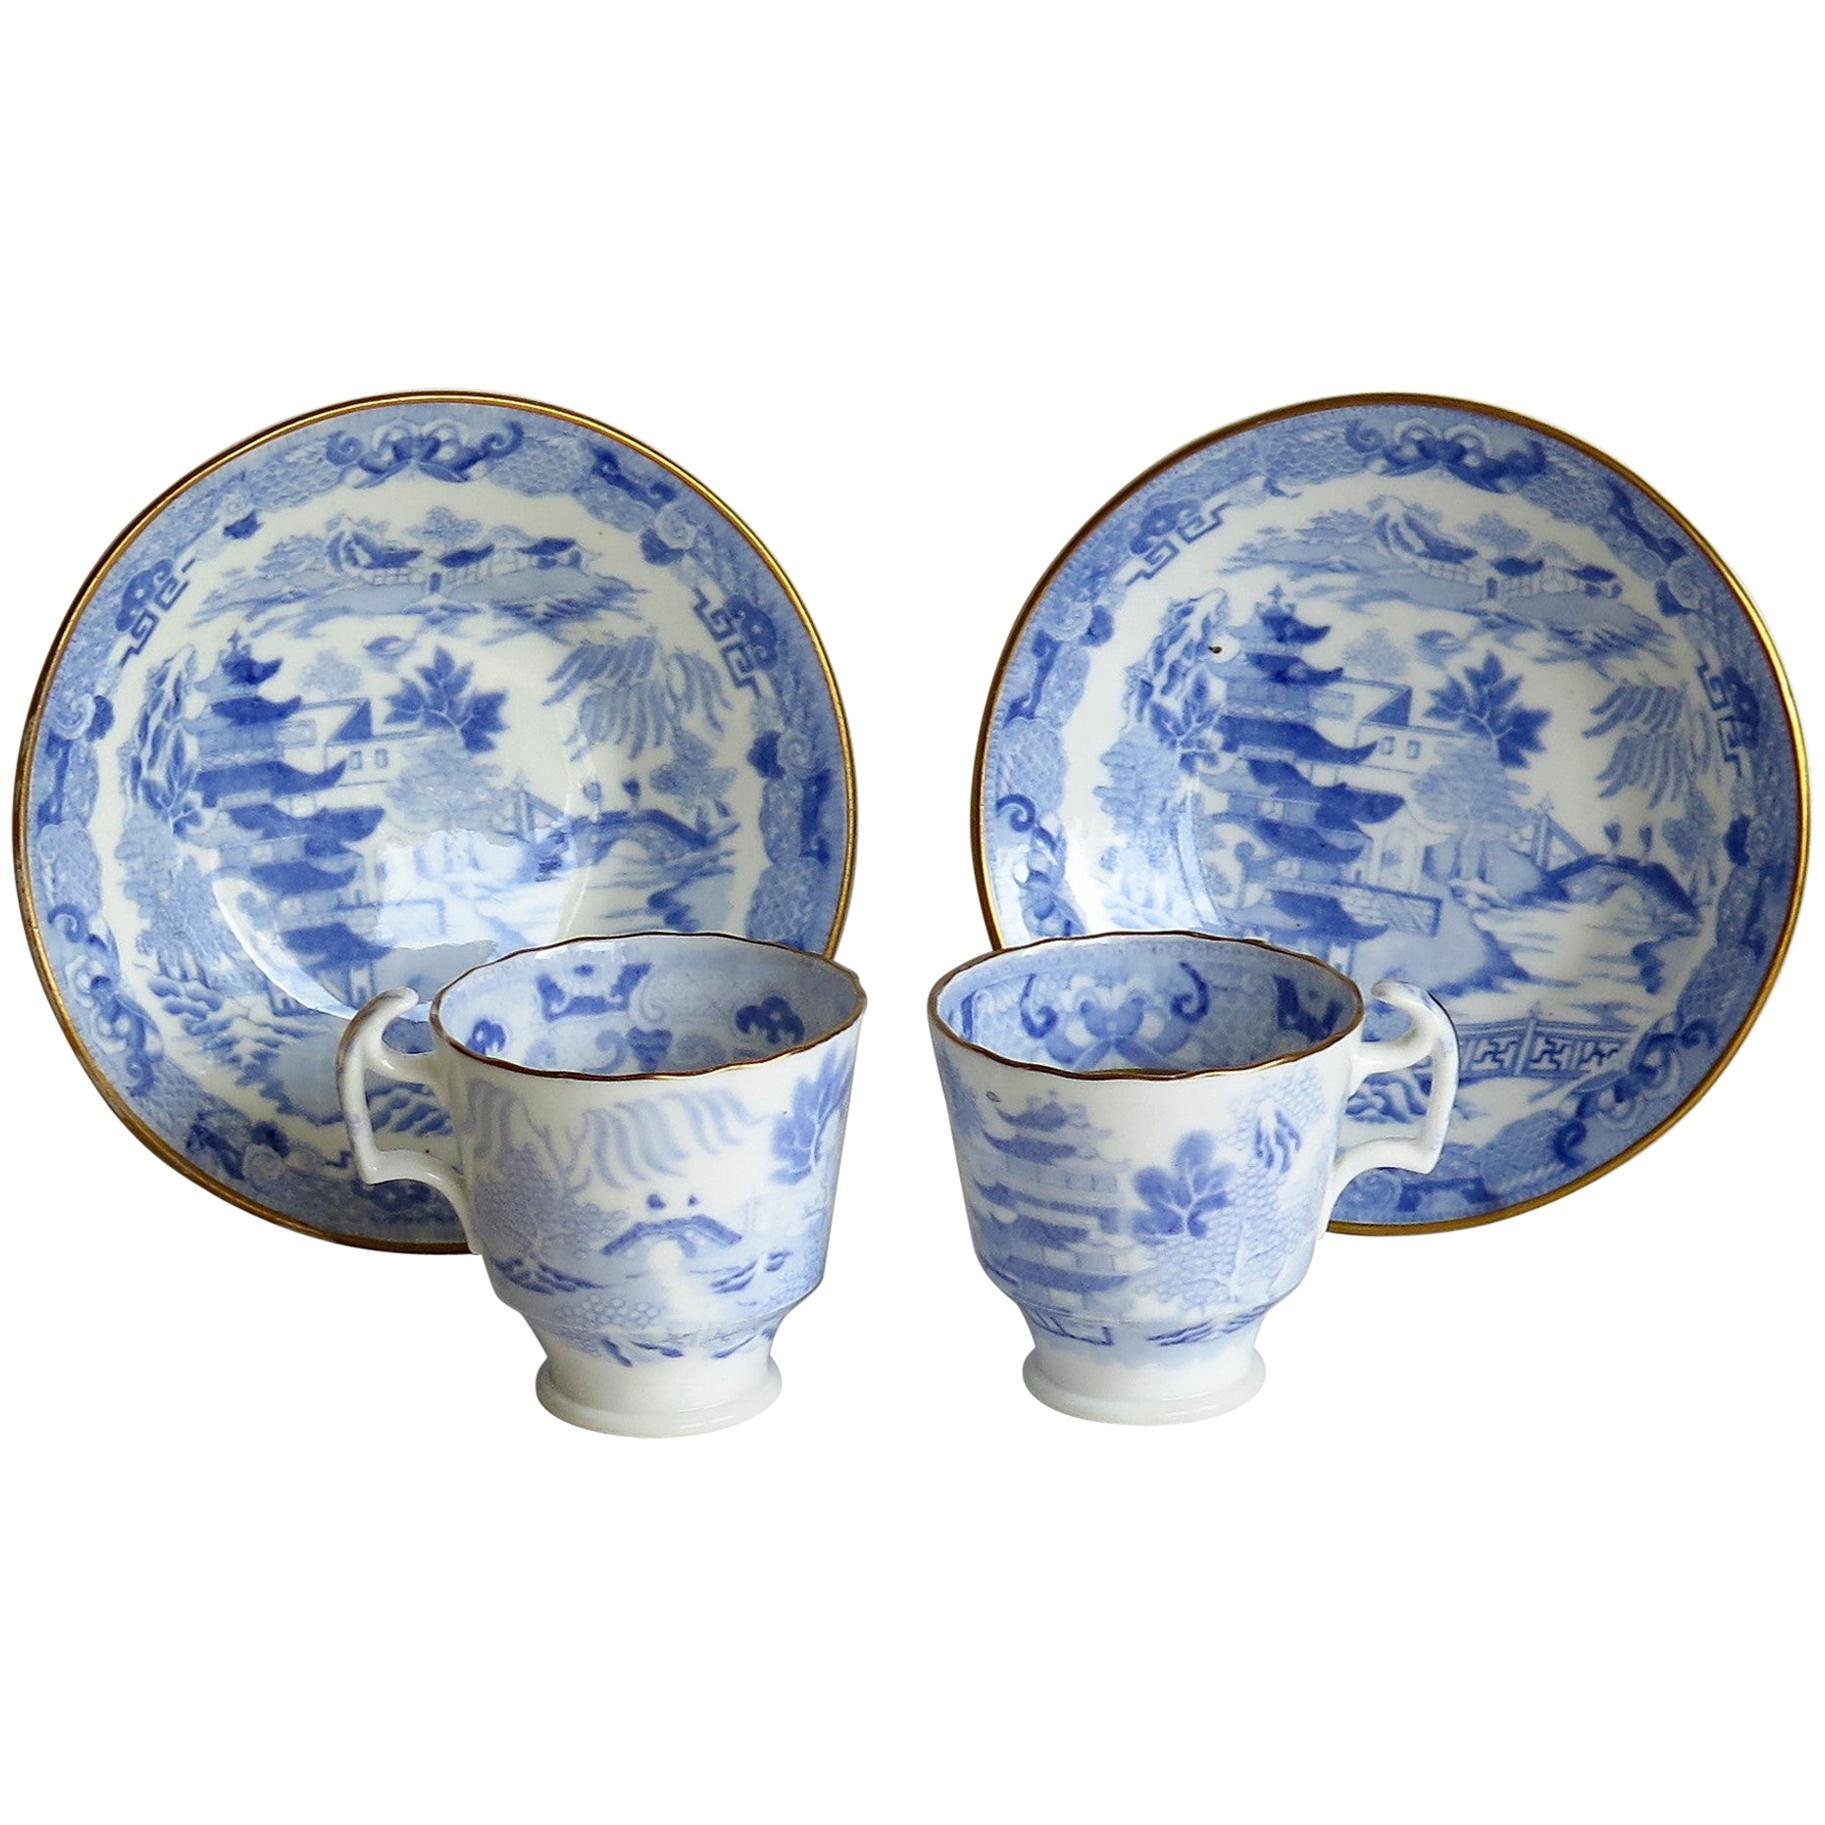 Miles Mason Porcelain Pair of Cups & Saucers Blue Broseley Willow Ptn circa 1815